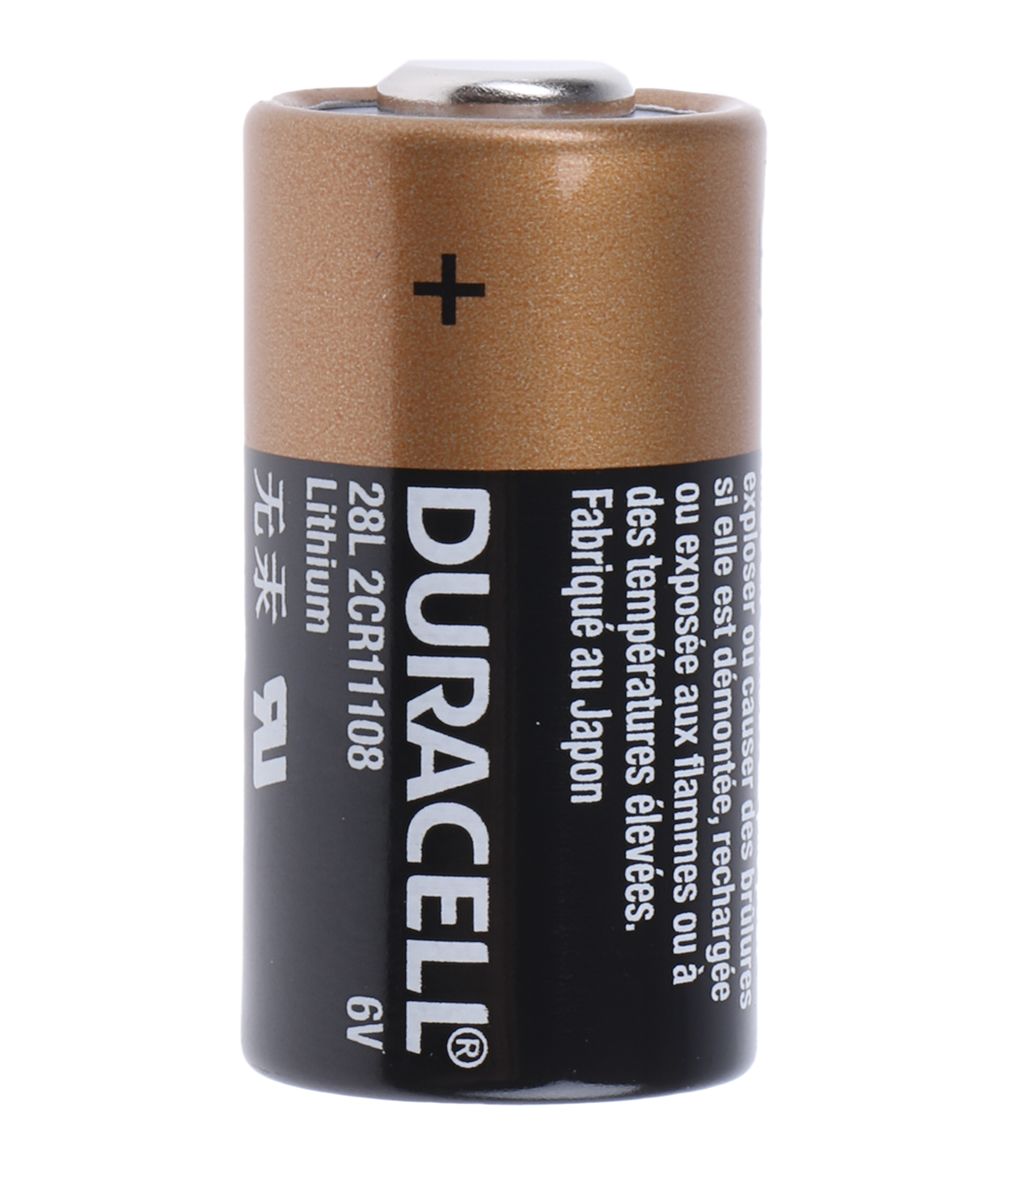 Duracell Lithium Manganese Dioxide 6V, 2CR11108 Camera Battery